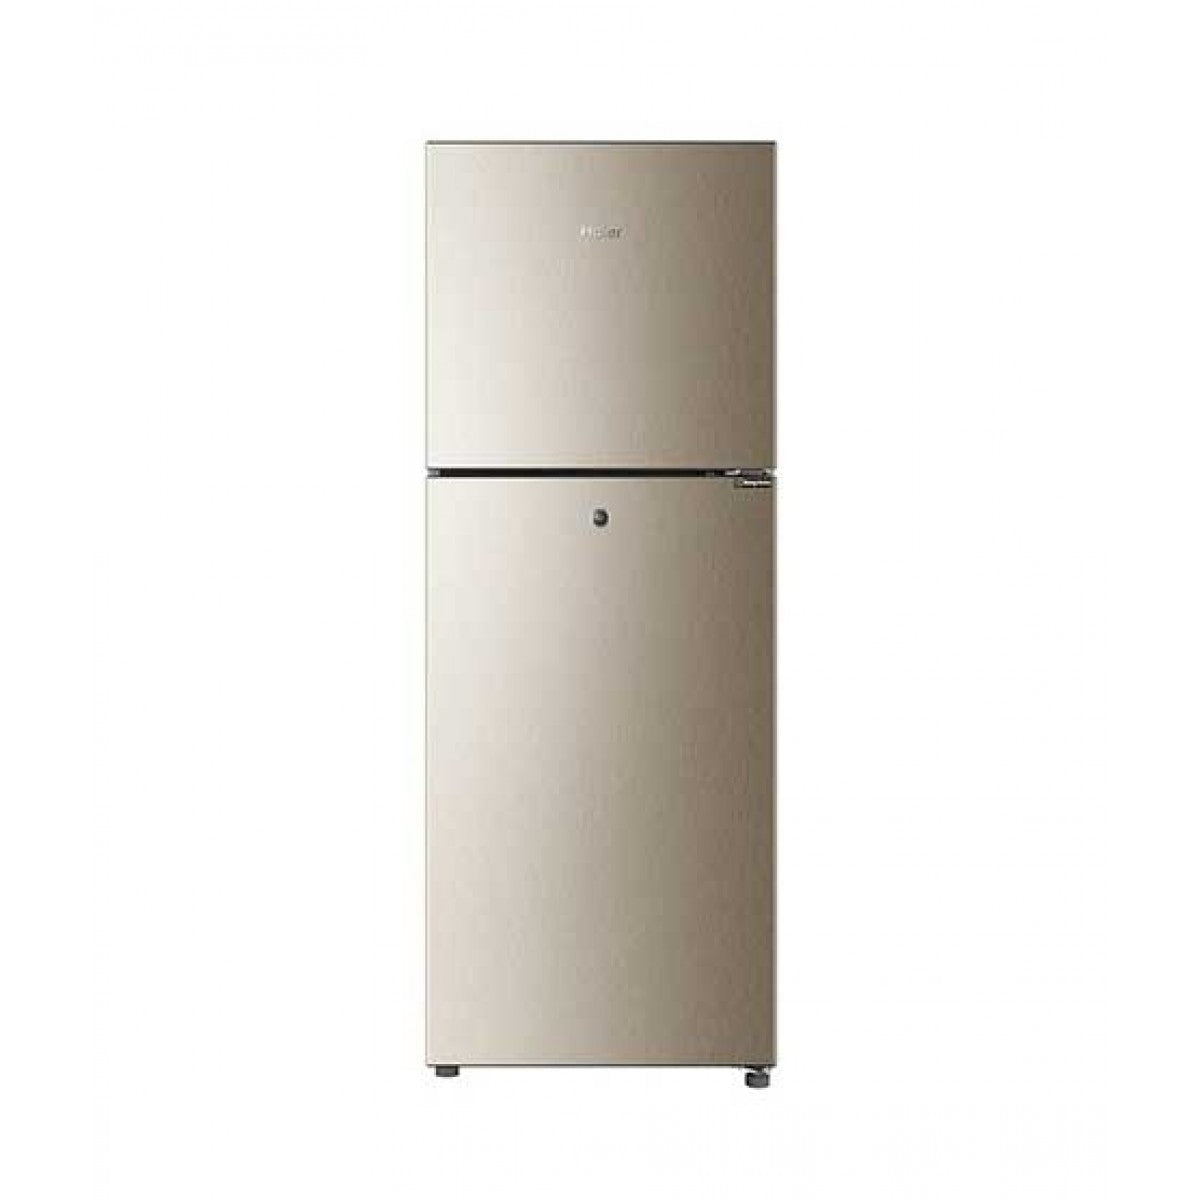 Haier Refrigerator Double Door - HRF-336 EBS/EBD (LVS)